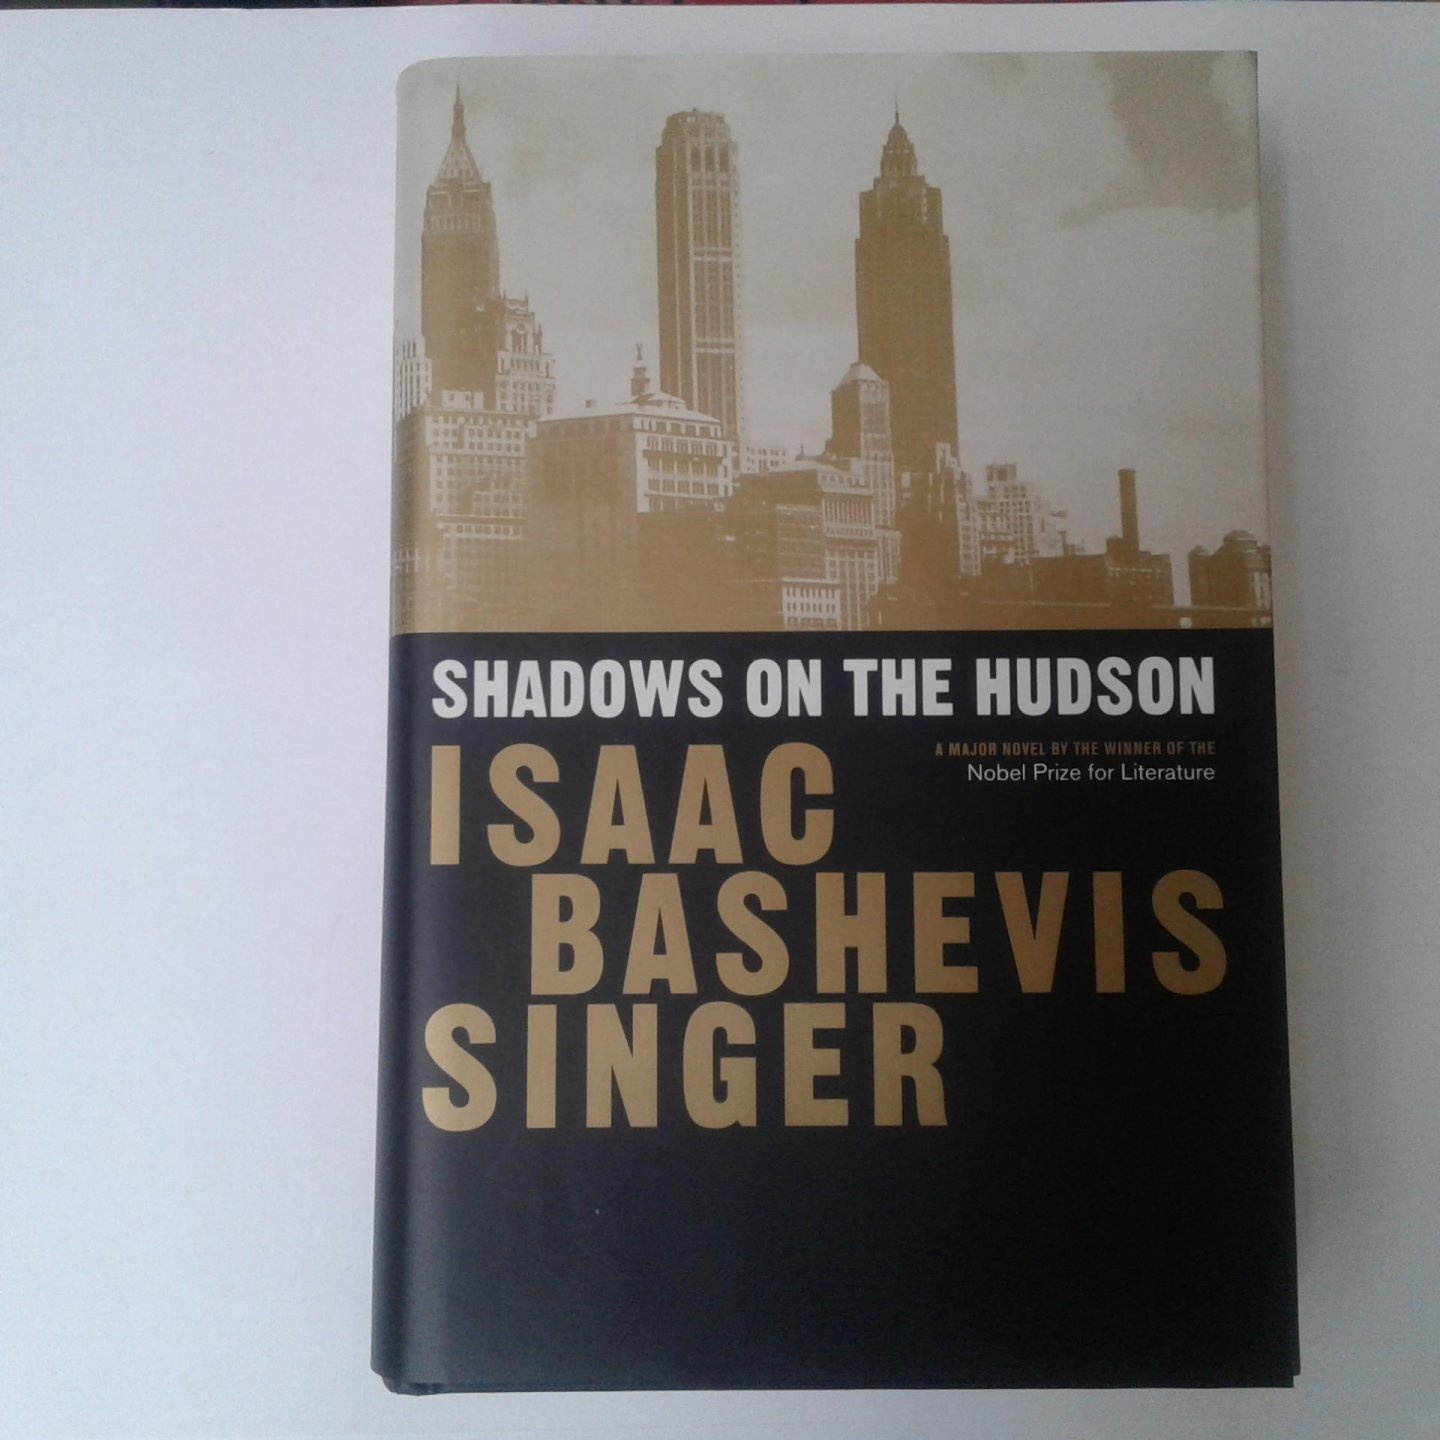 Bashevis Singer, Isaac - Shadows on the Hudson